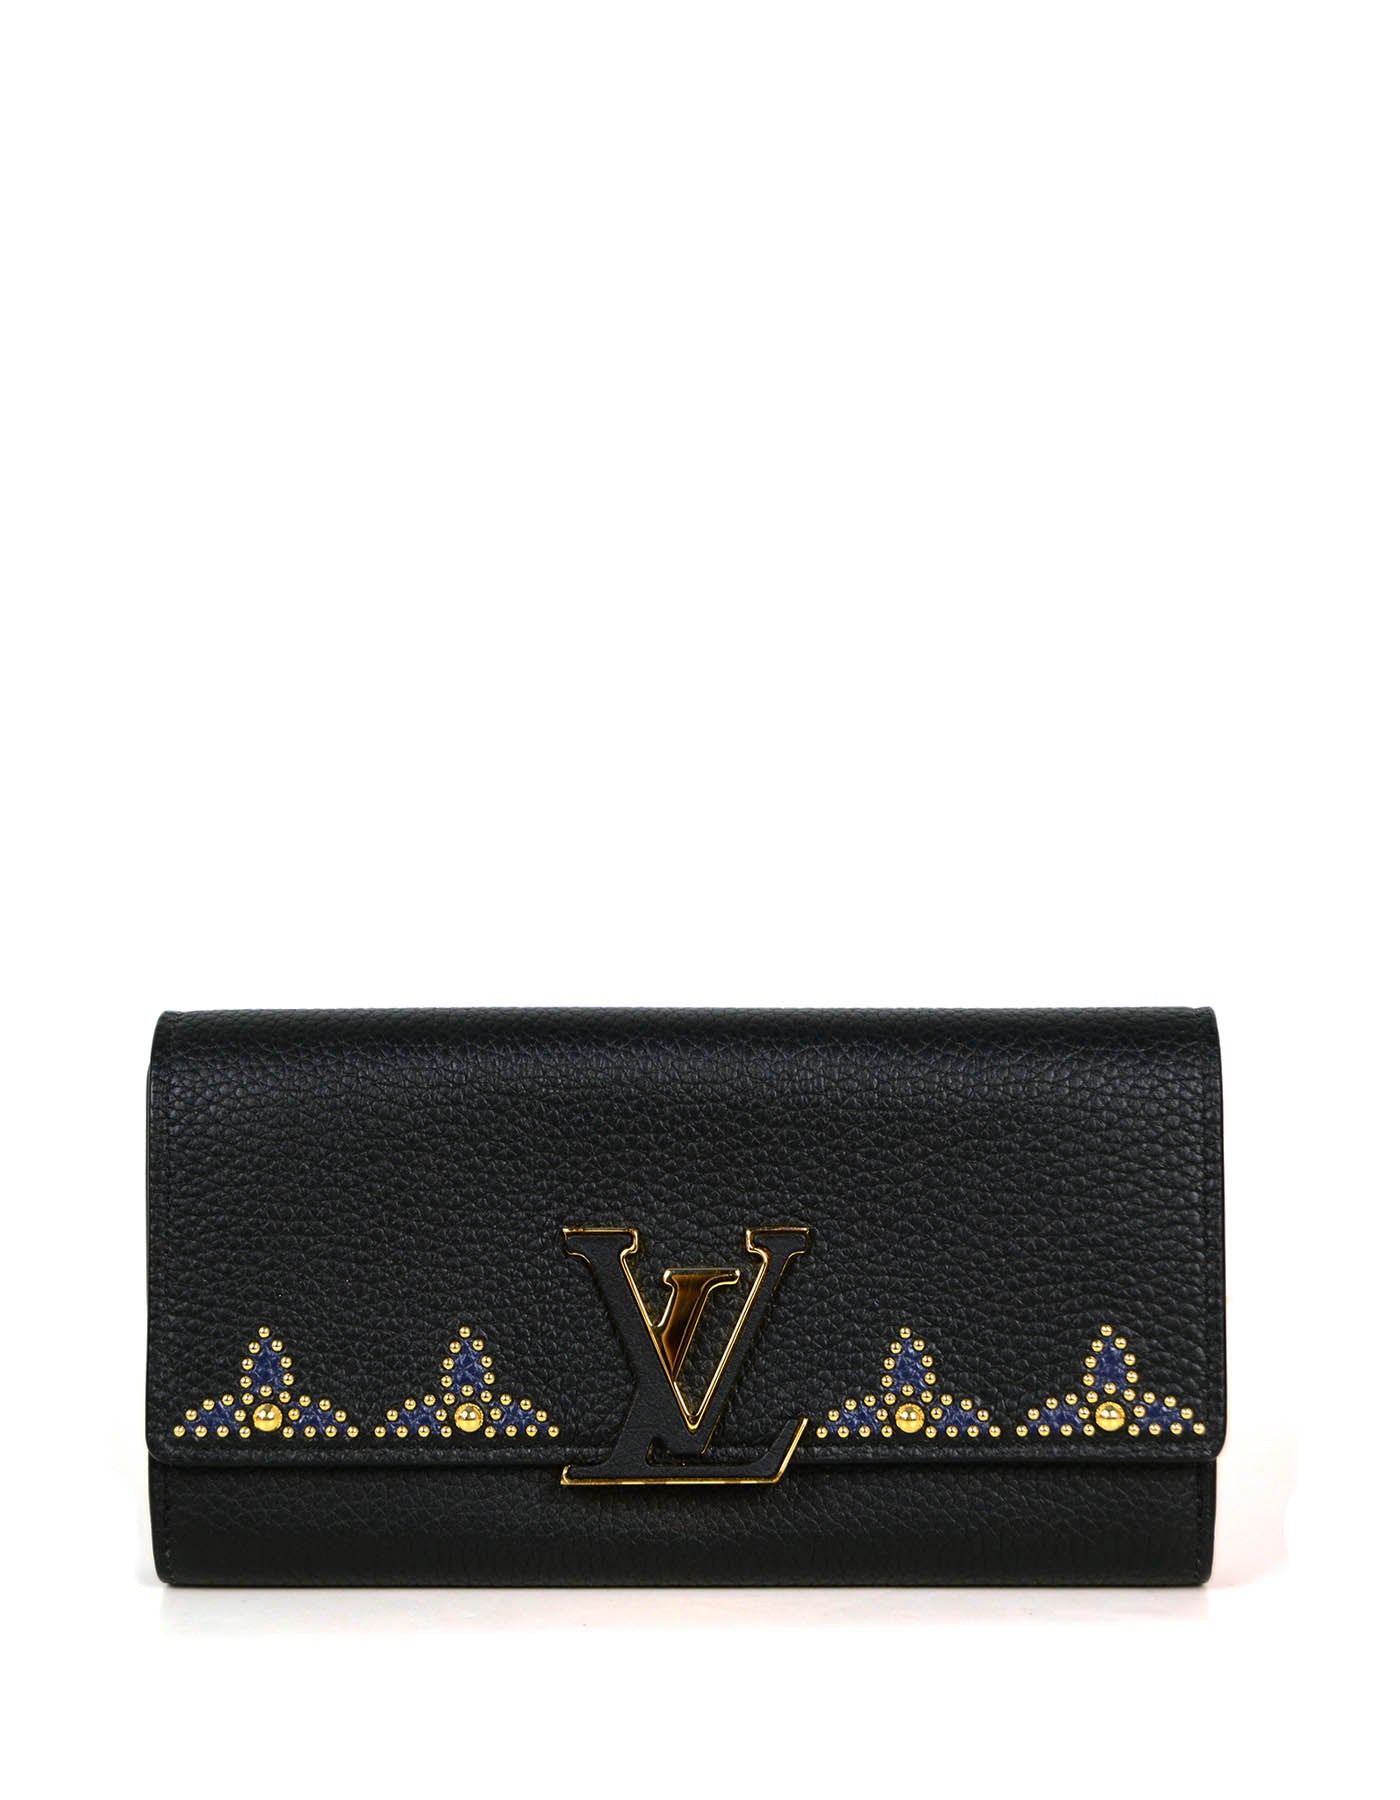 Louis Vuitton Black Leather Capucines Studded Wallet